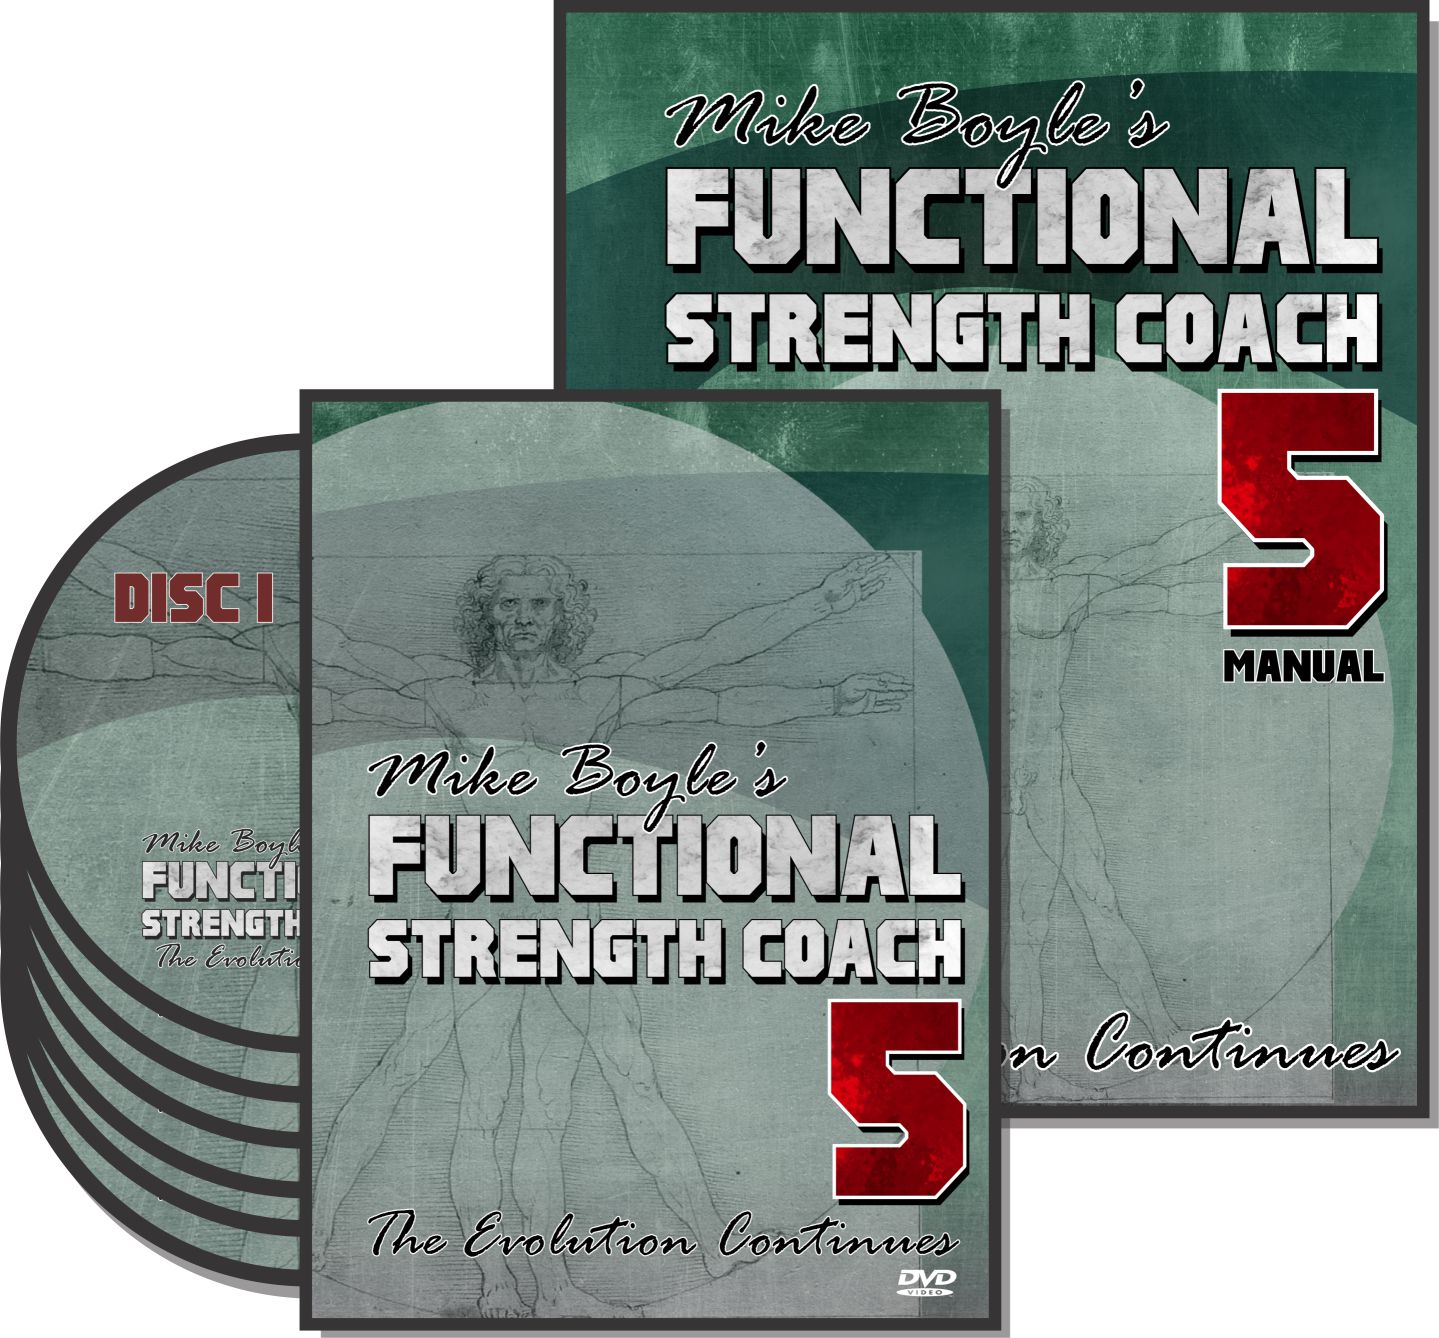 Functional Strength Coach 5: An Inside Look